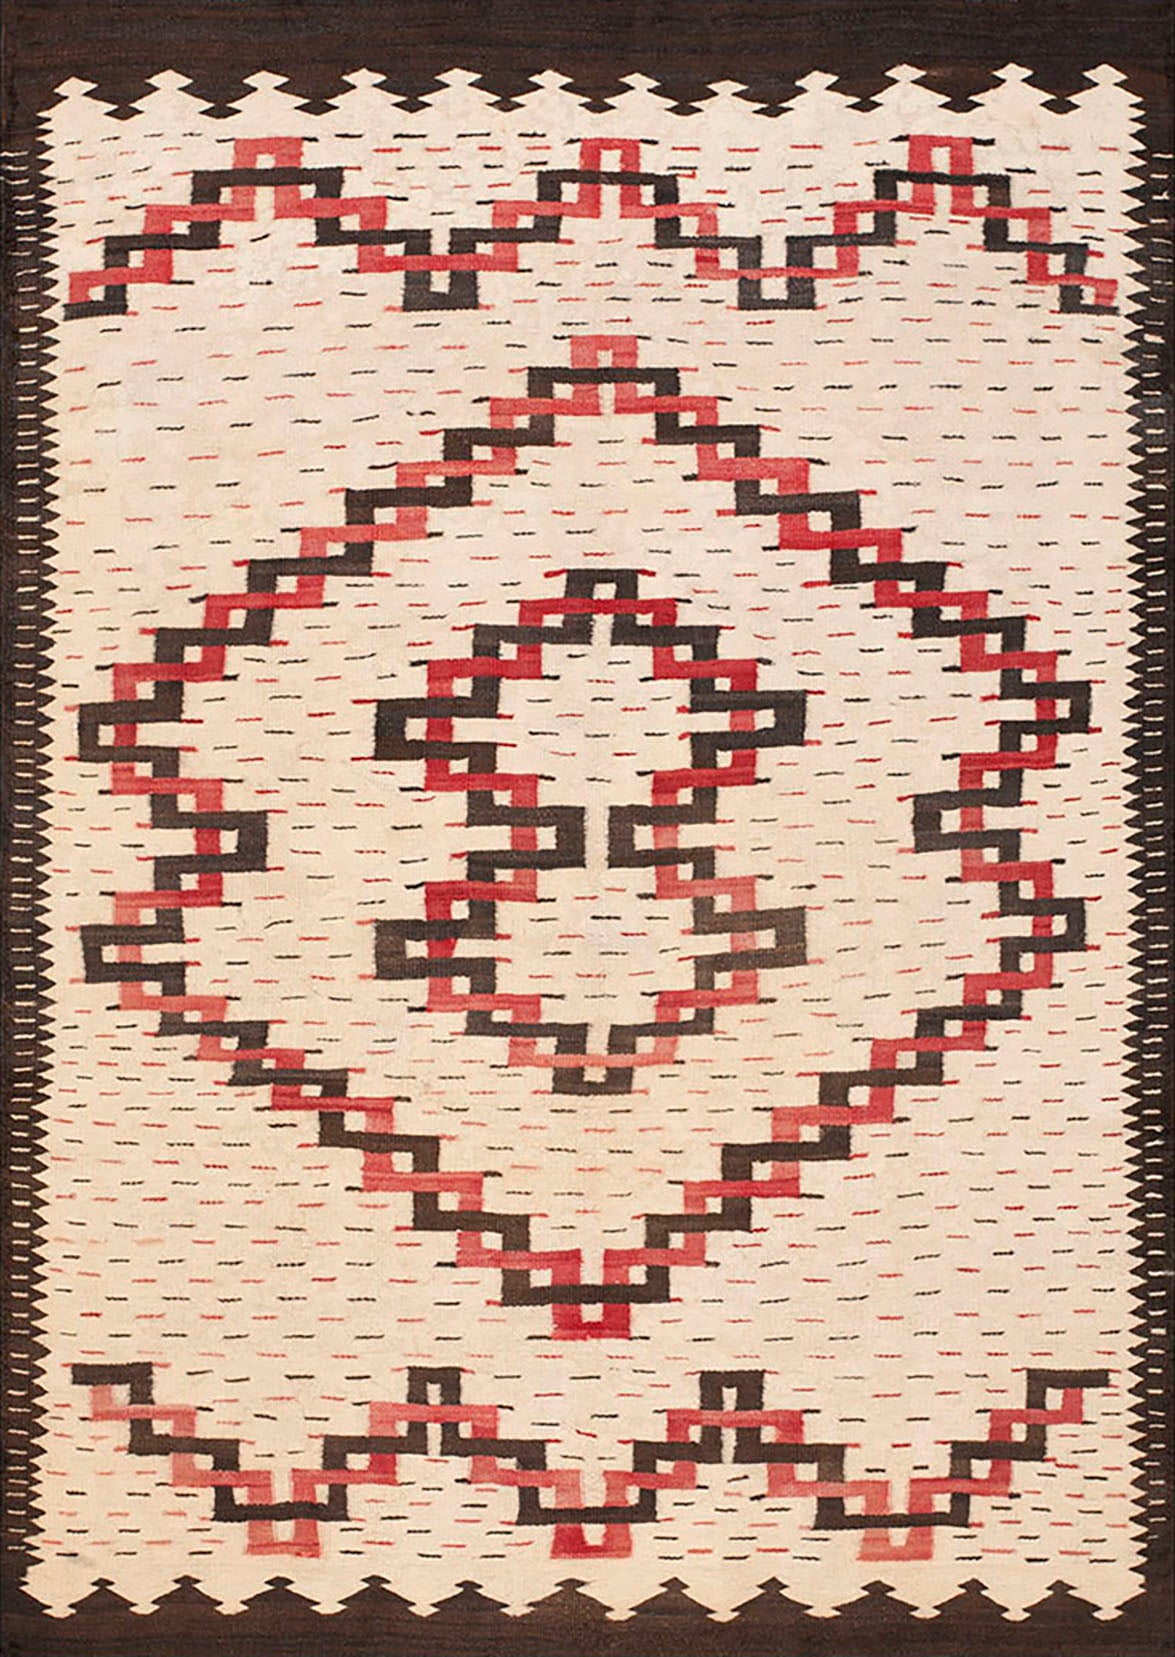 Early 20th Century American Navajo Carpet ( 5' x 6'10" - 152 x 208 )